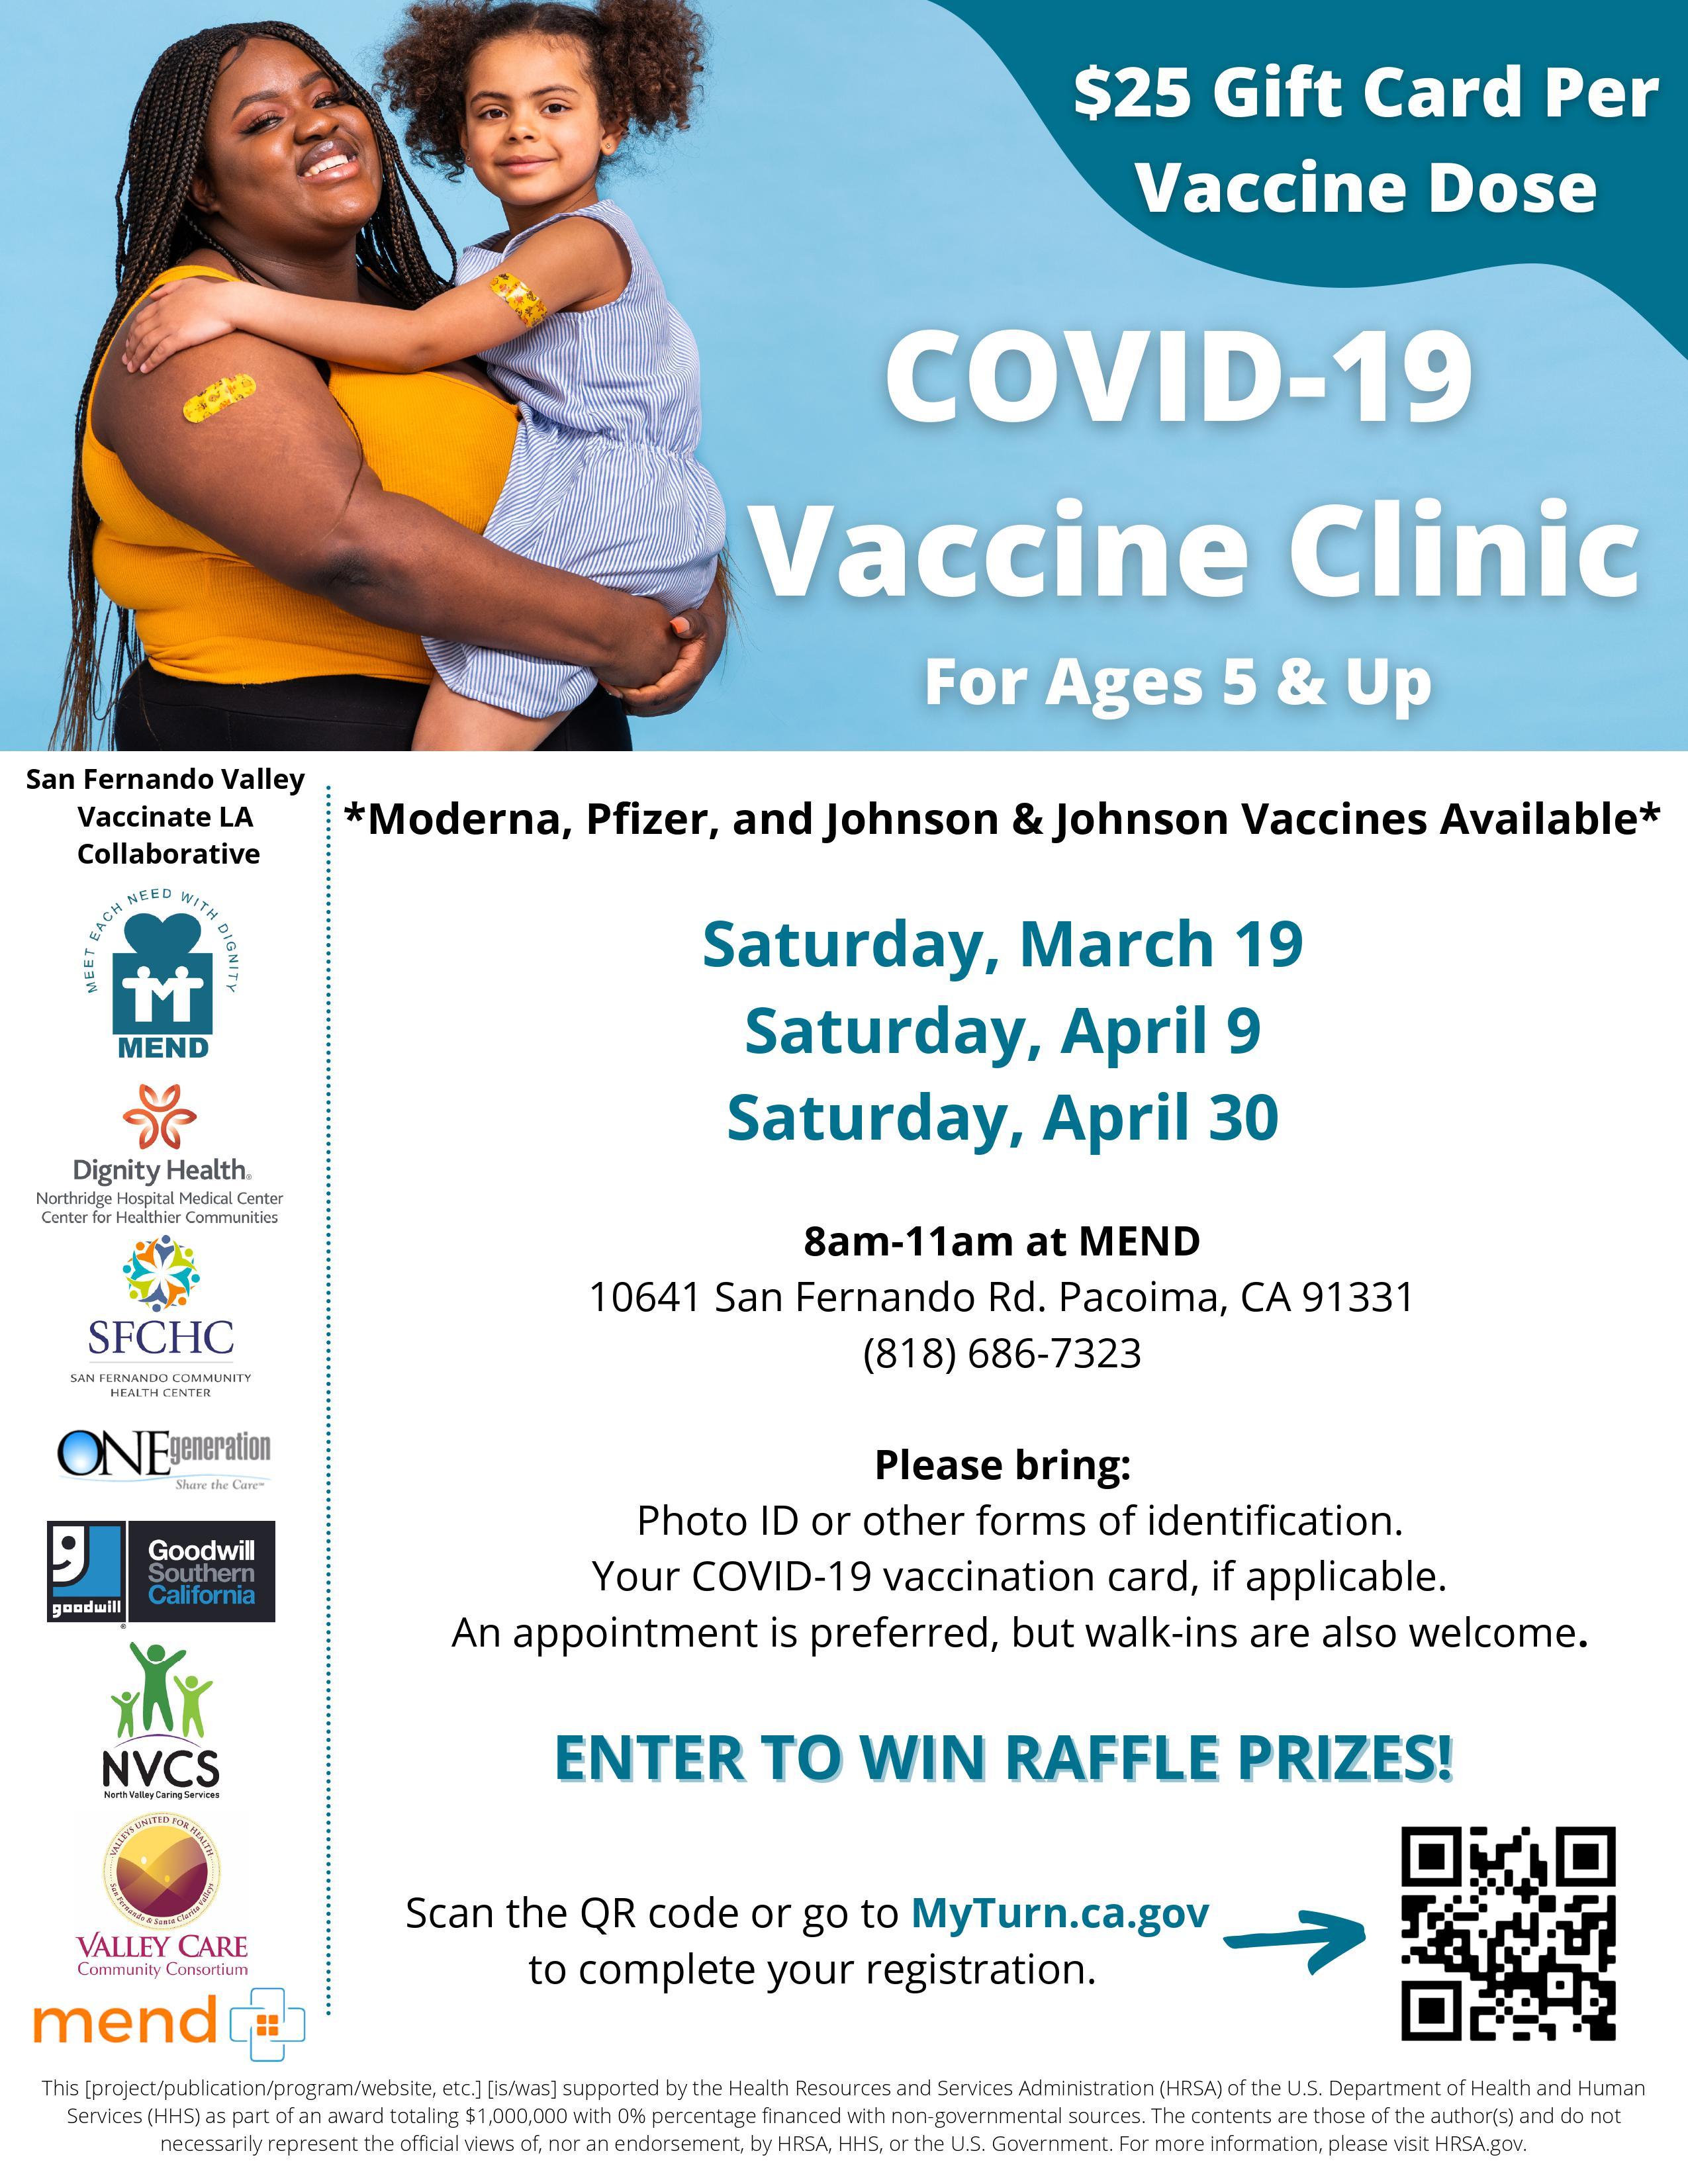 COVID Vaccine Clinic on 4/9 & 30